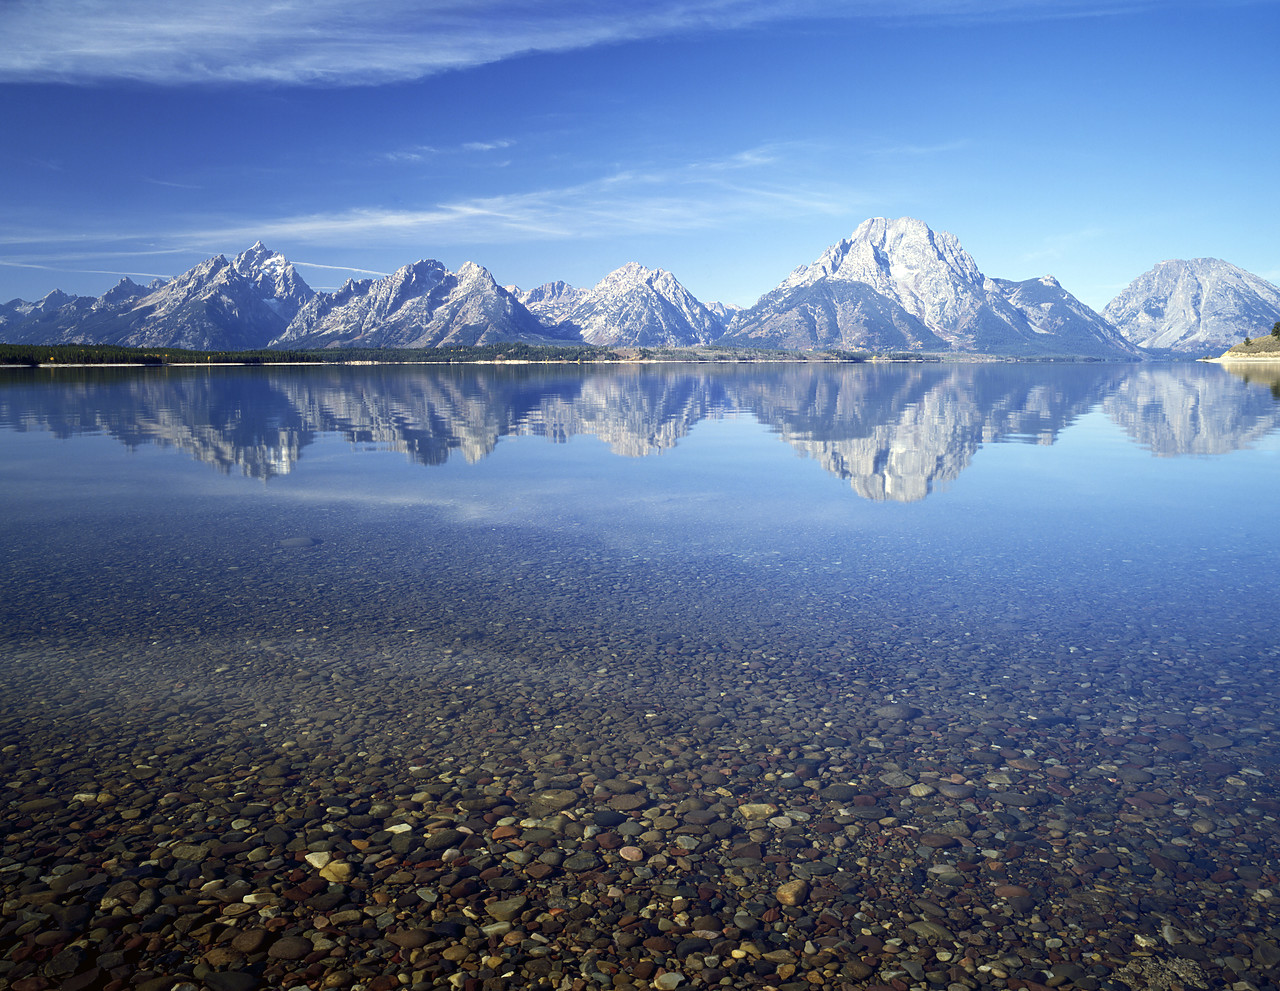 #913726-2 - Grand Tetons Reflecting in Jackson Lake, Grand Tetons National Park, Wyoming, USA